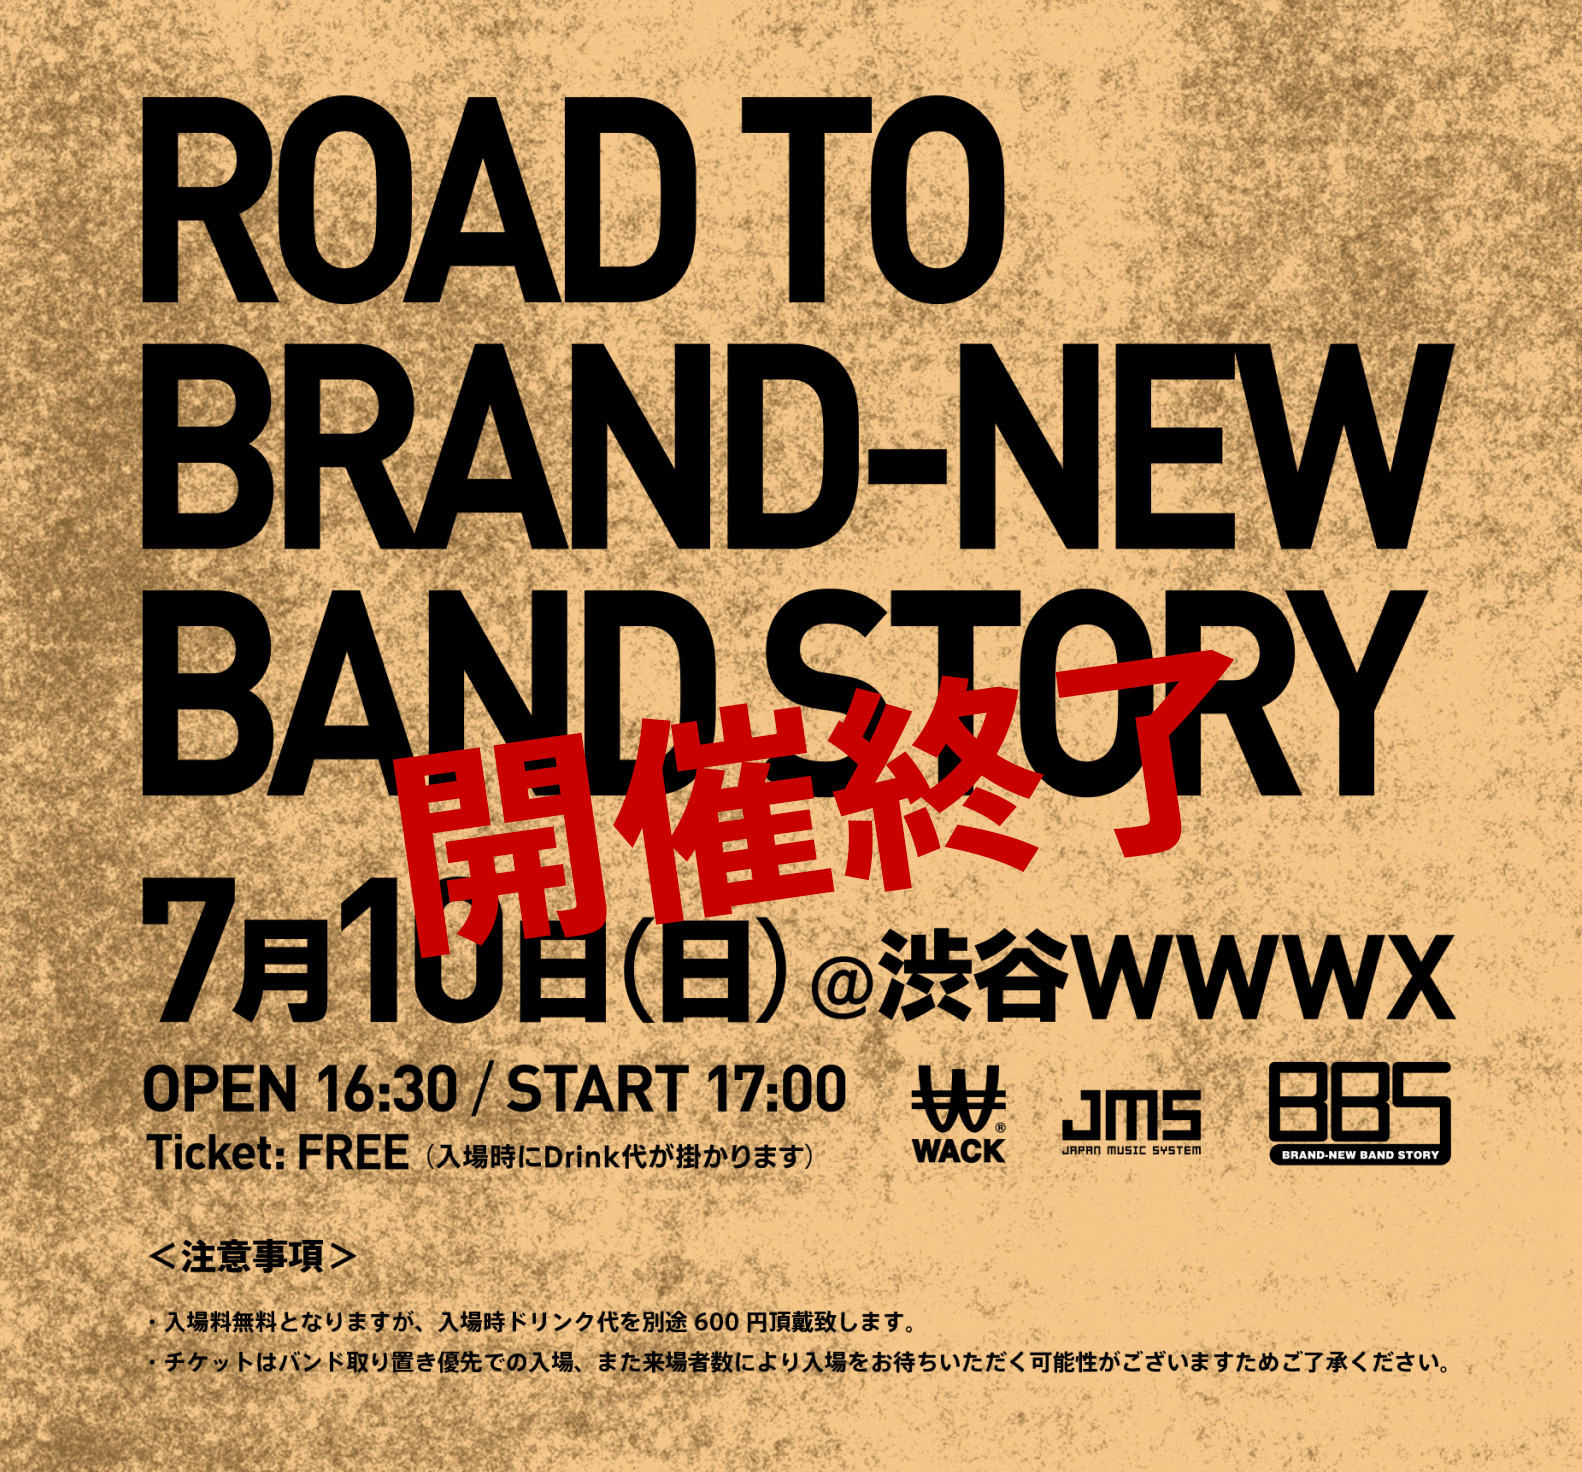 road to brandnew brand story 7月10日 渋谷WWWX